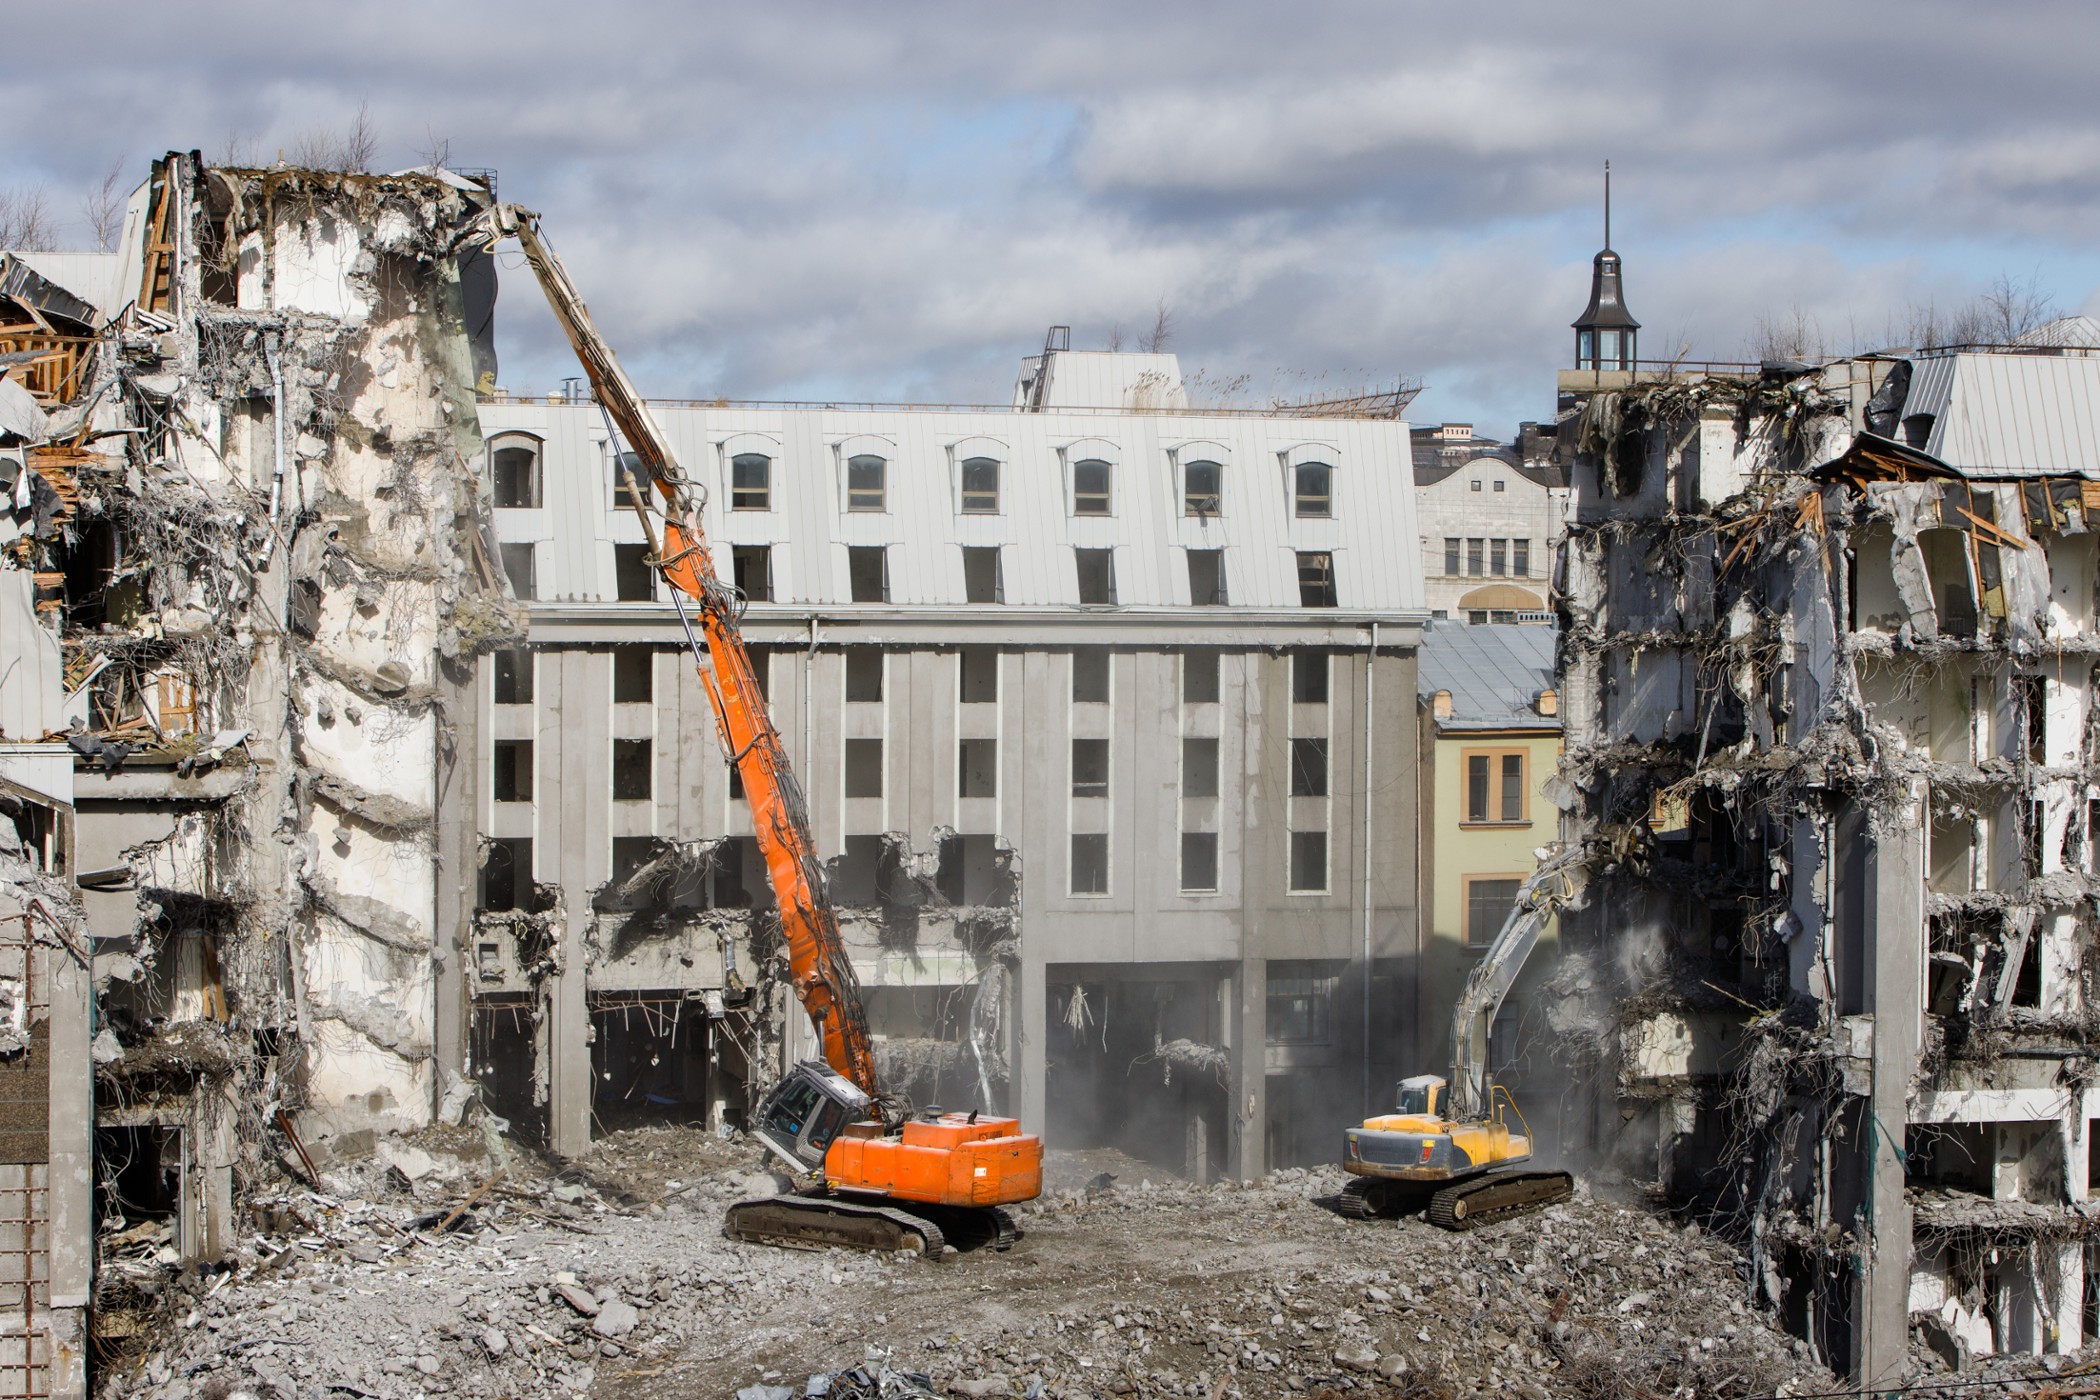 Heavy-duty demolition machinery and equipment